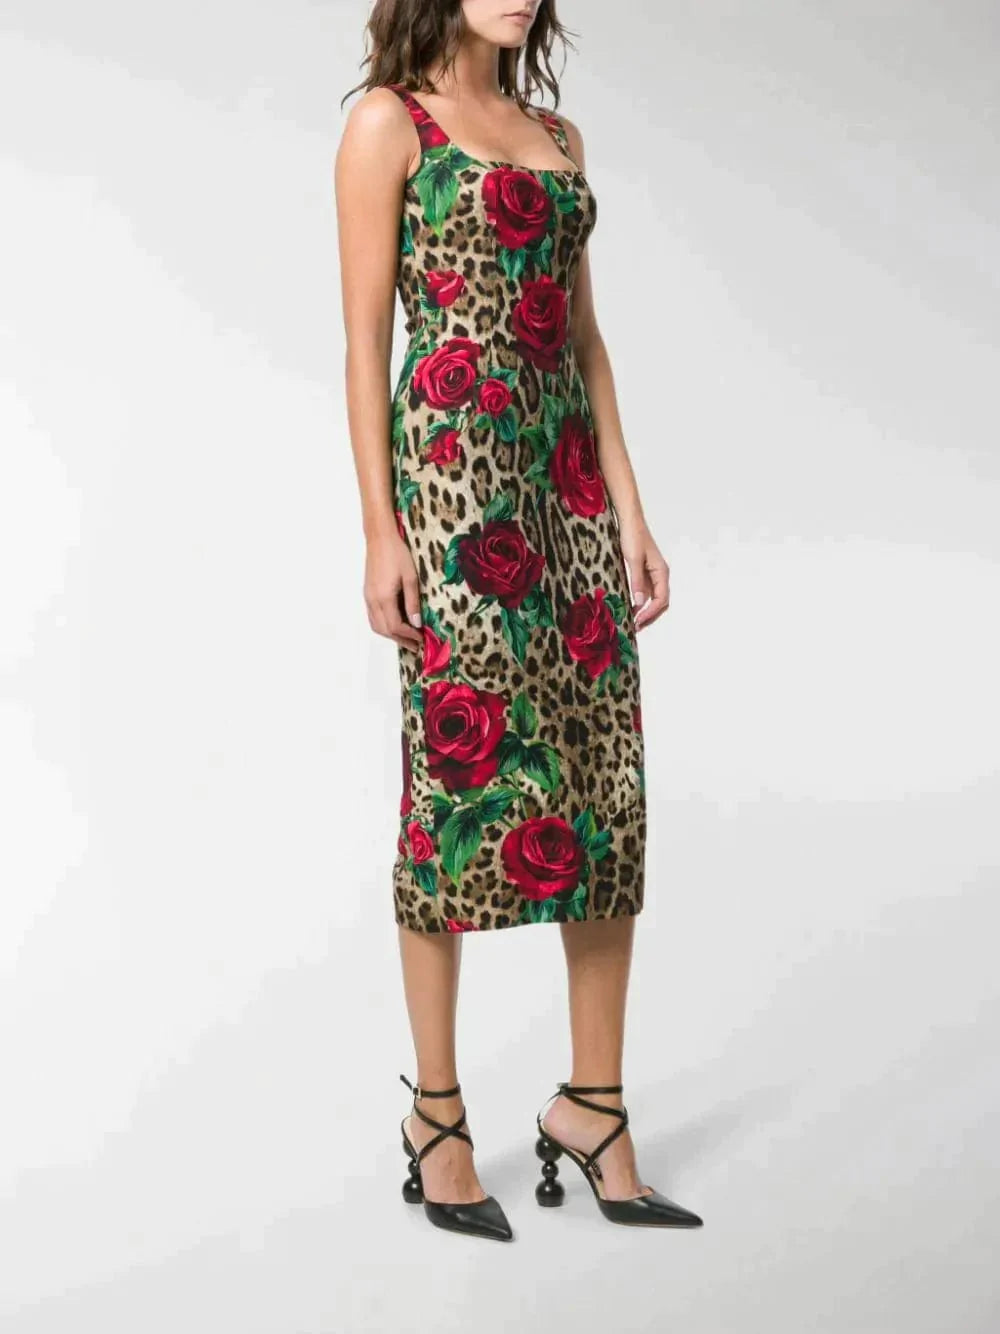 Dolce & Gabbana Leopard Rose Print Bodycon Midi Dress